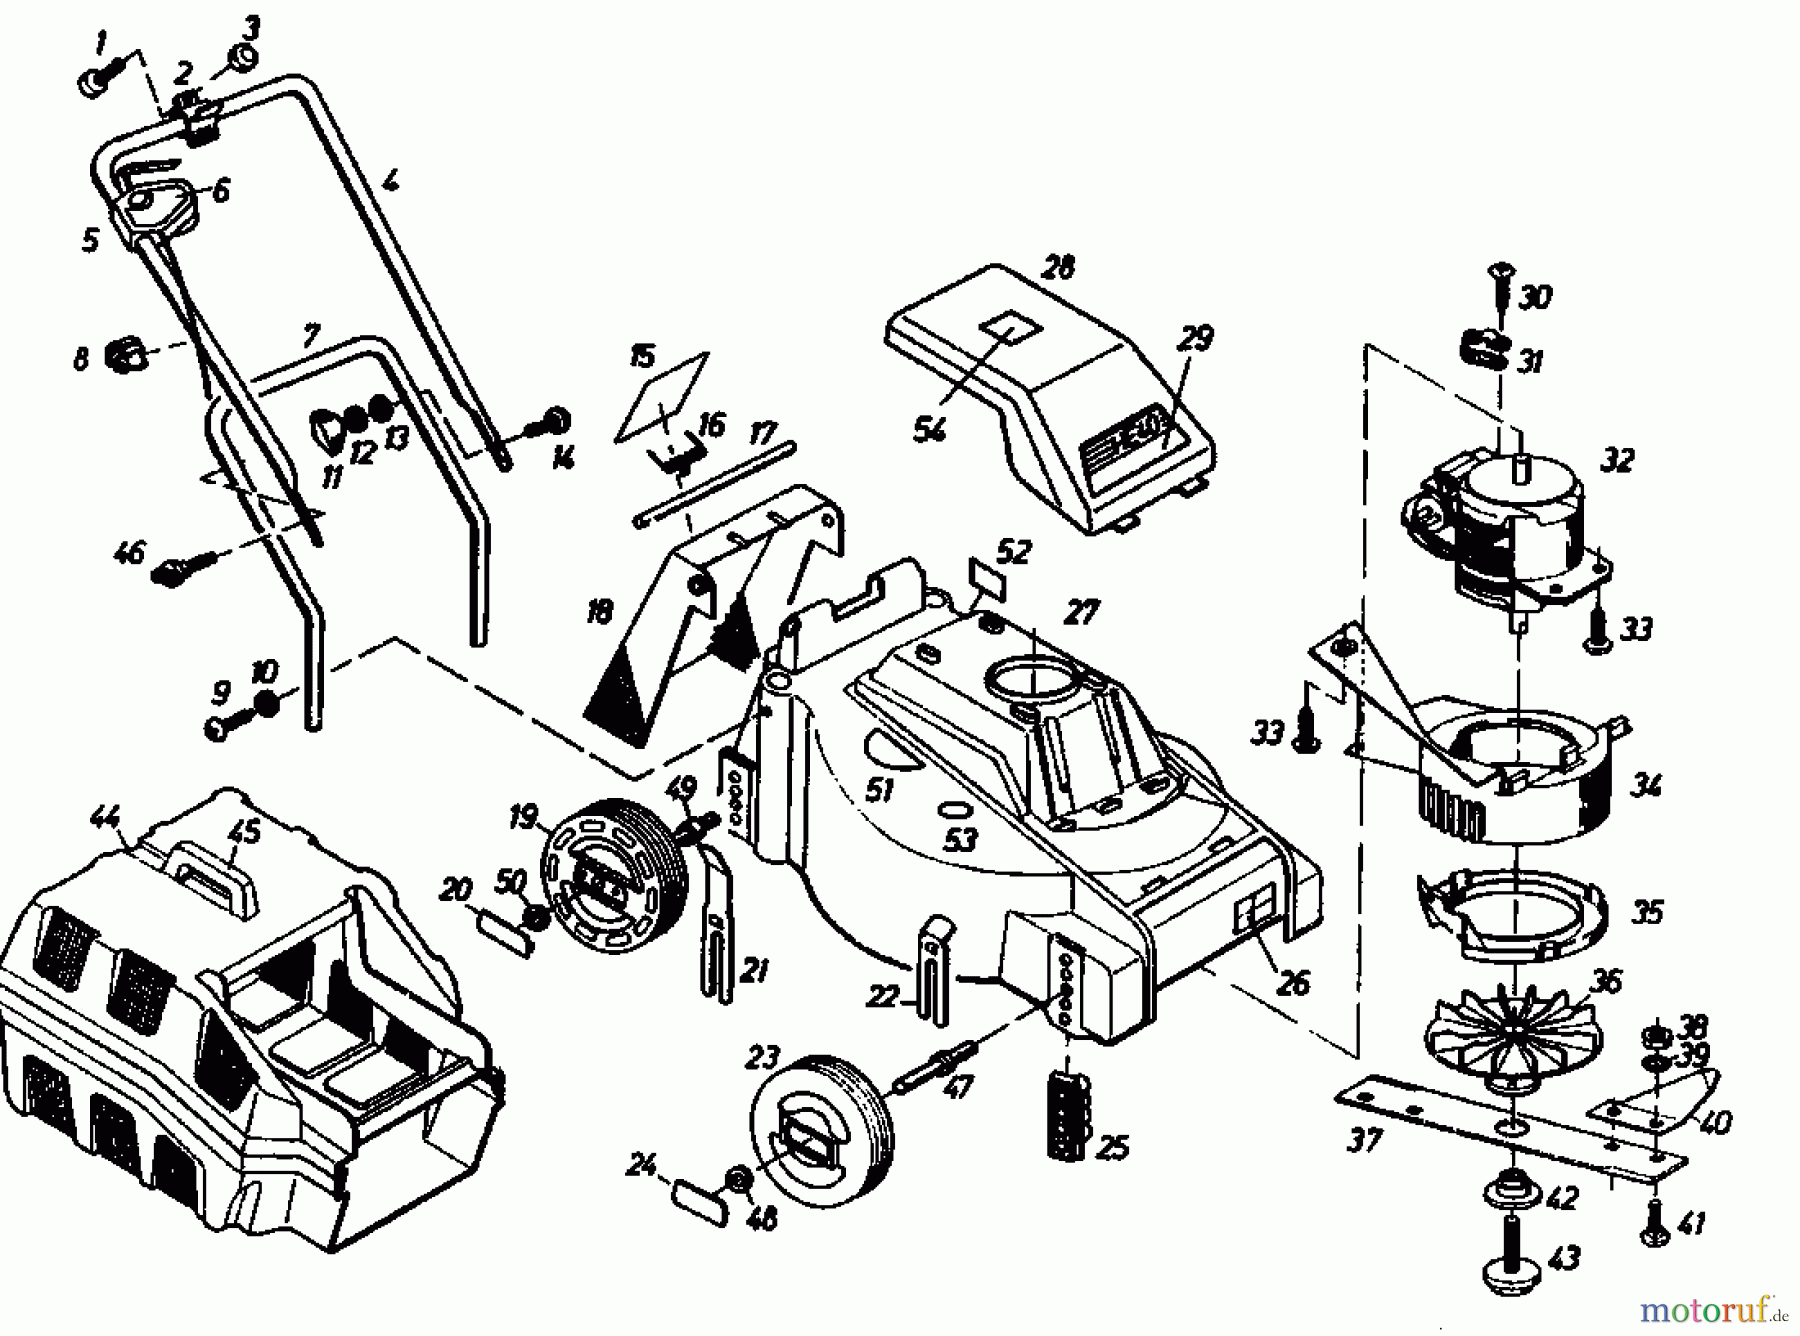  Gutbrod Electric mower HE 40 02889.04  (1986) Basic machine